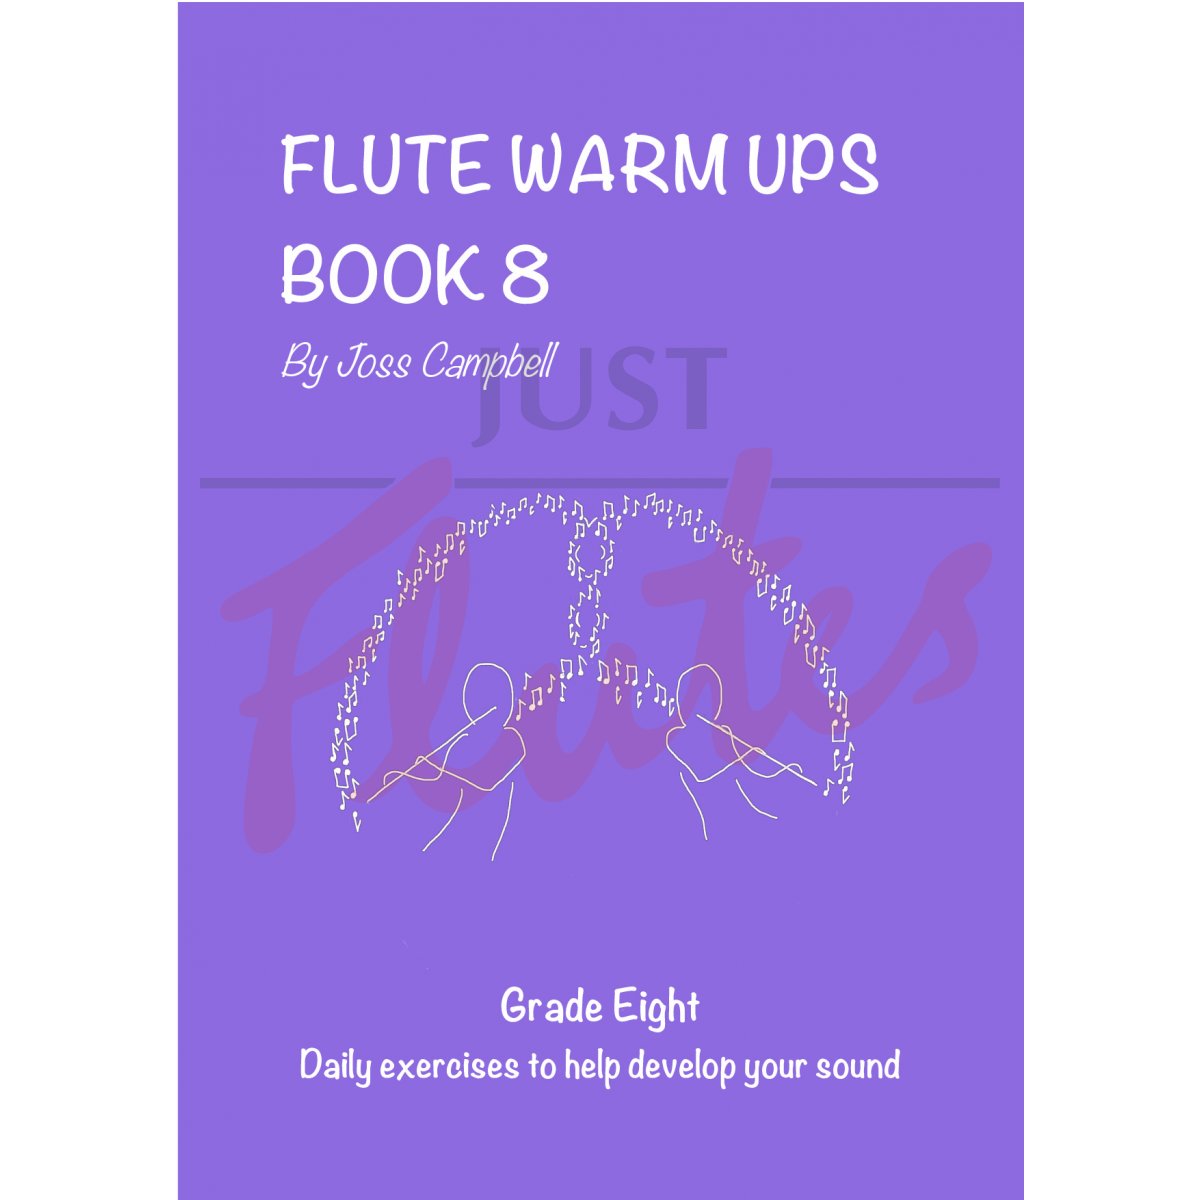 Flute Warm Ups Book 8